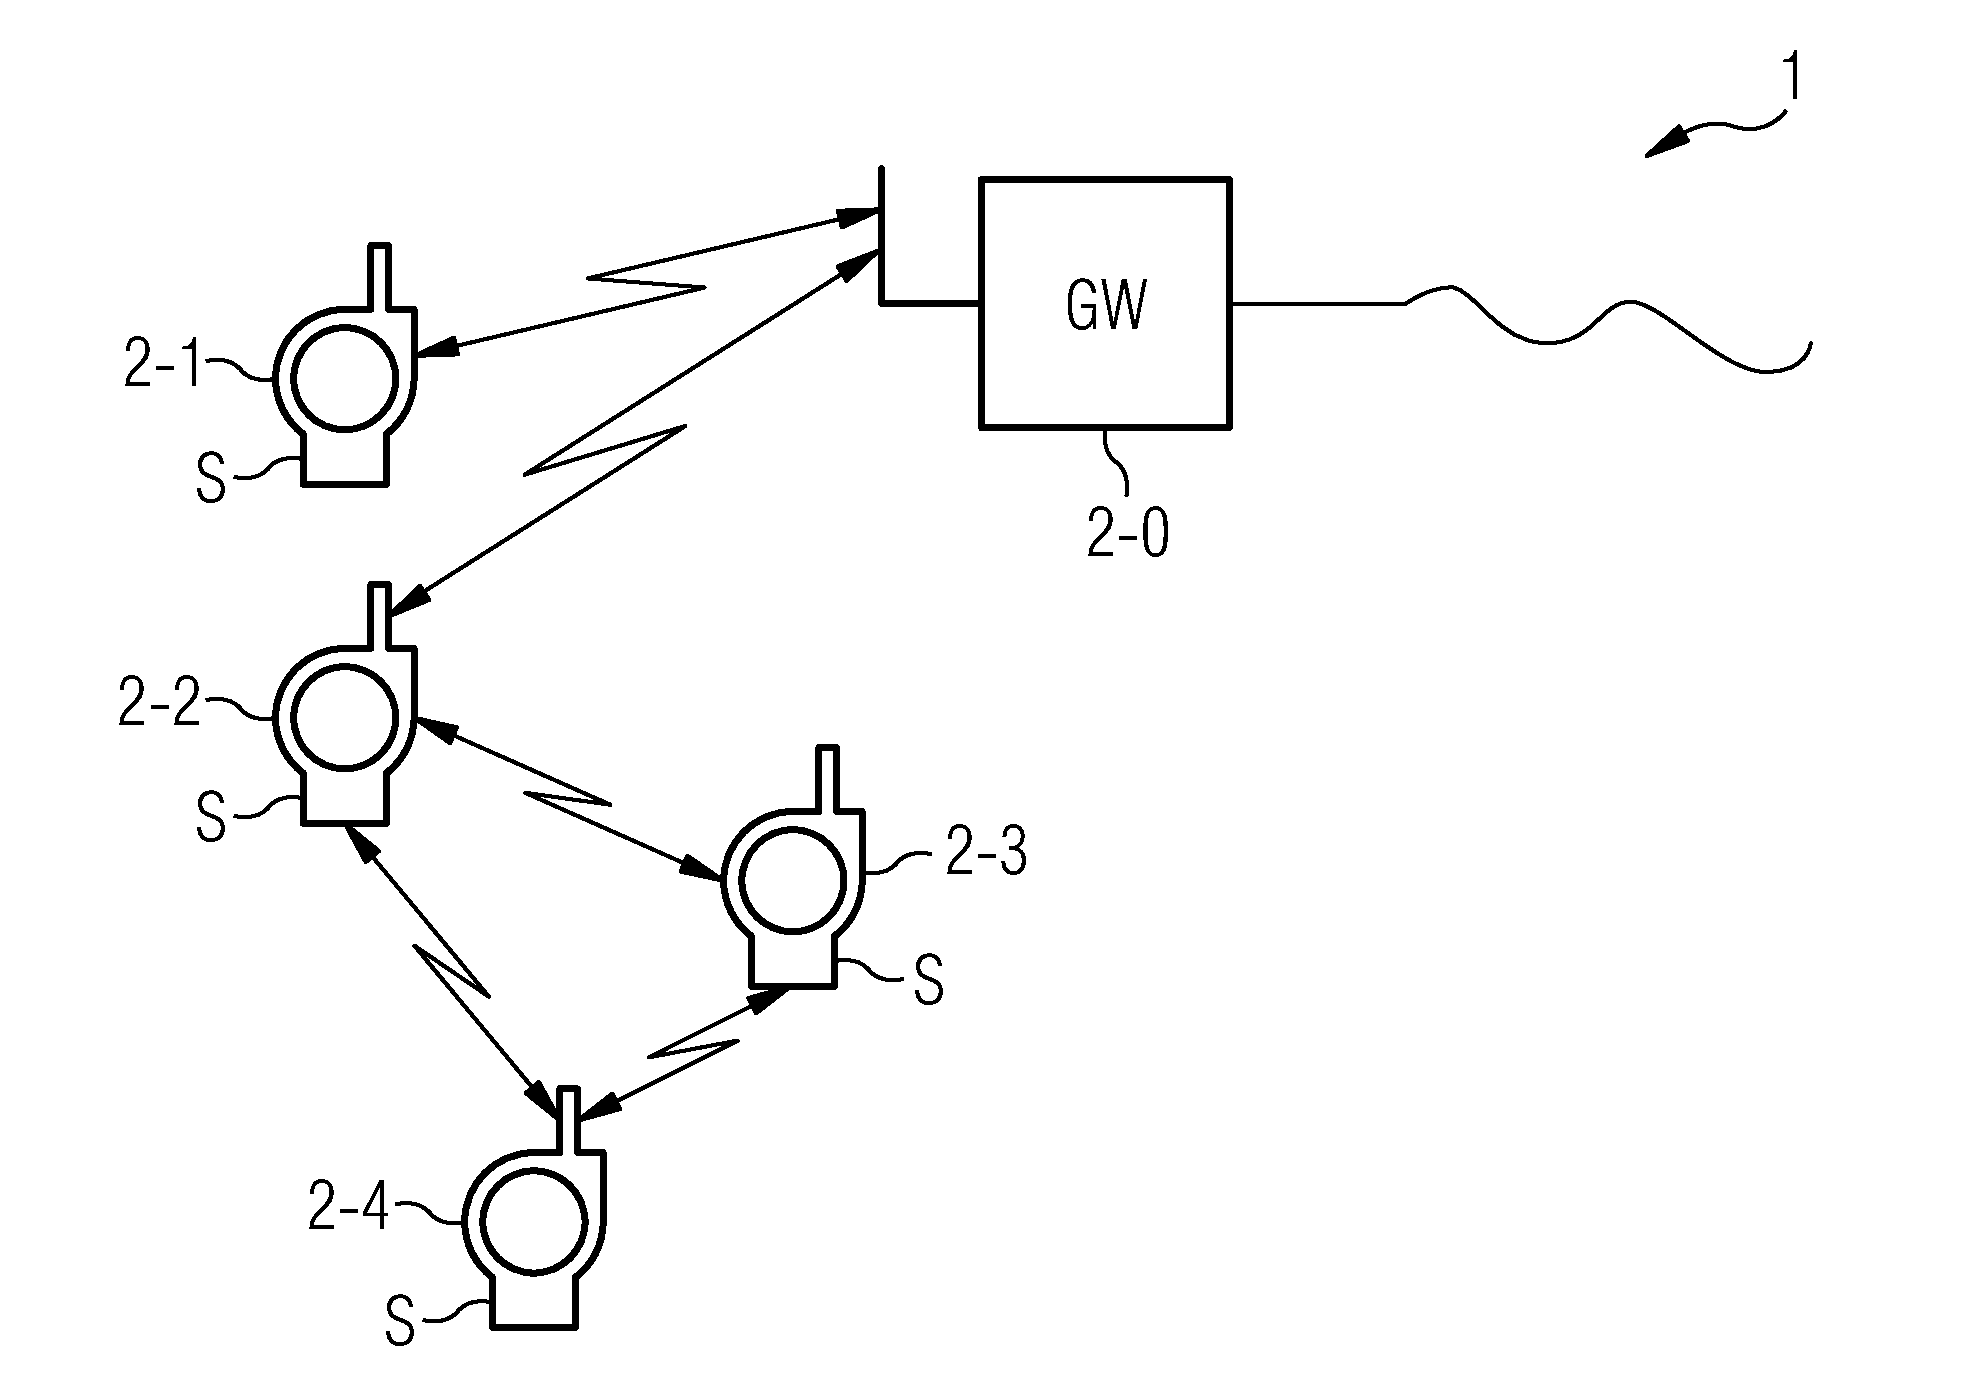 Method for transmitting data between network nodes